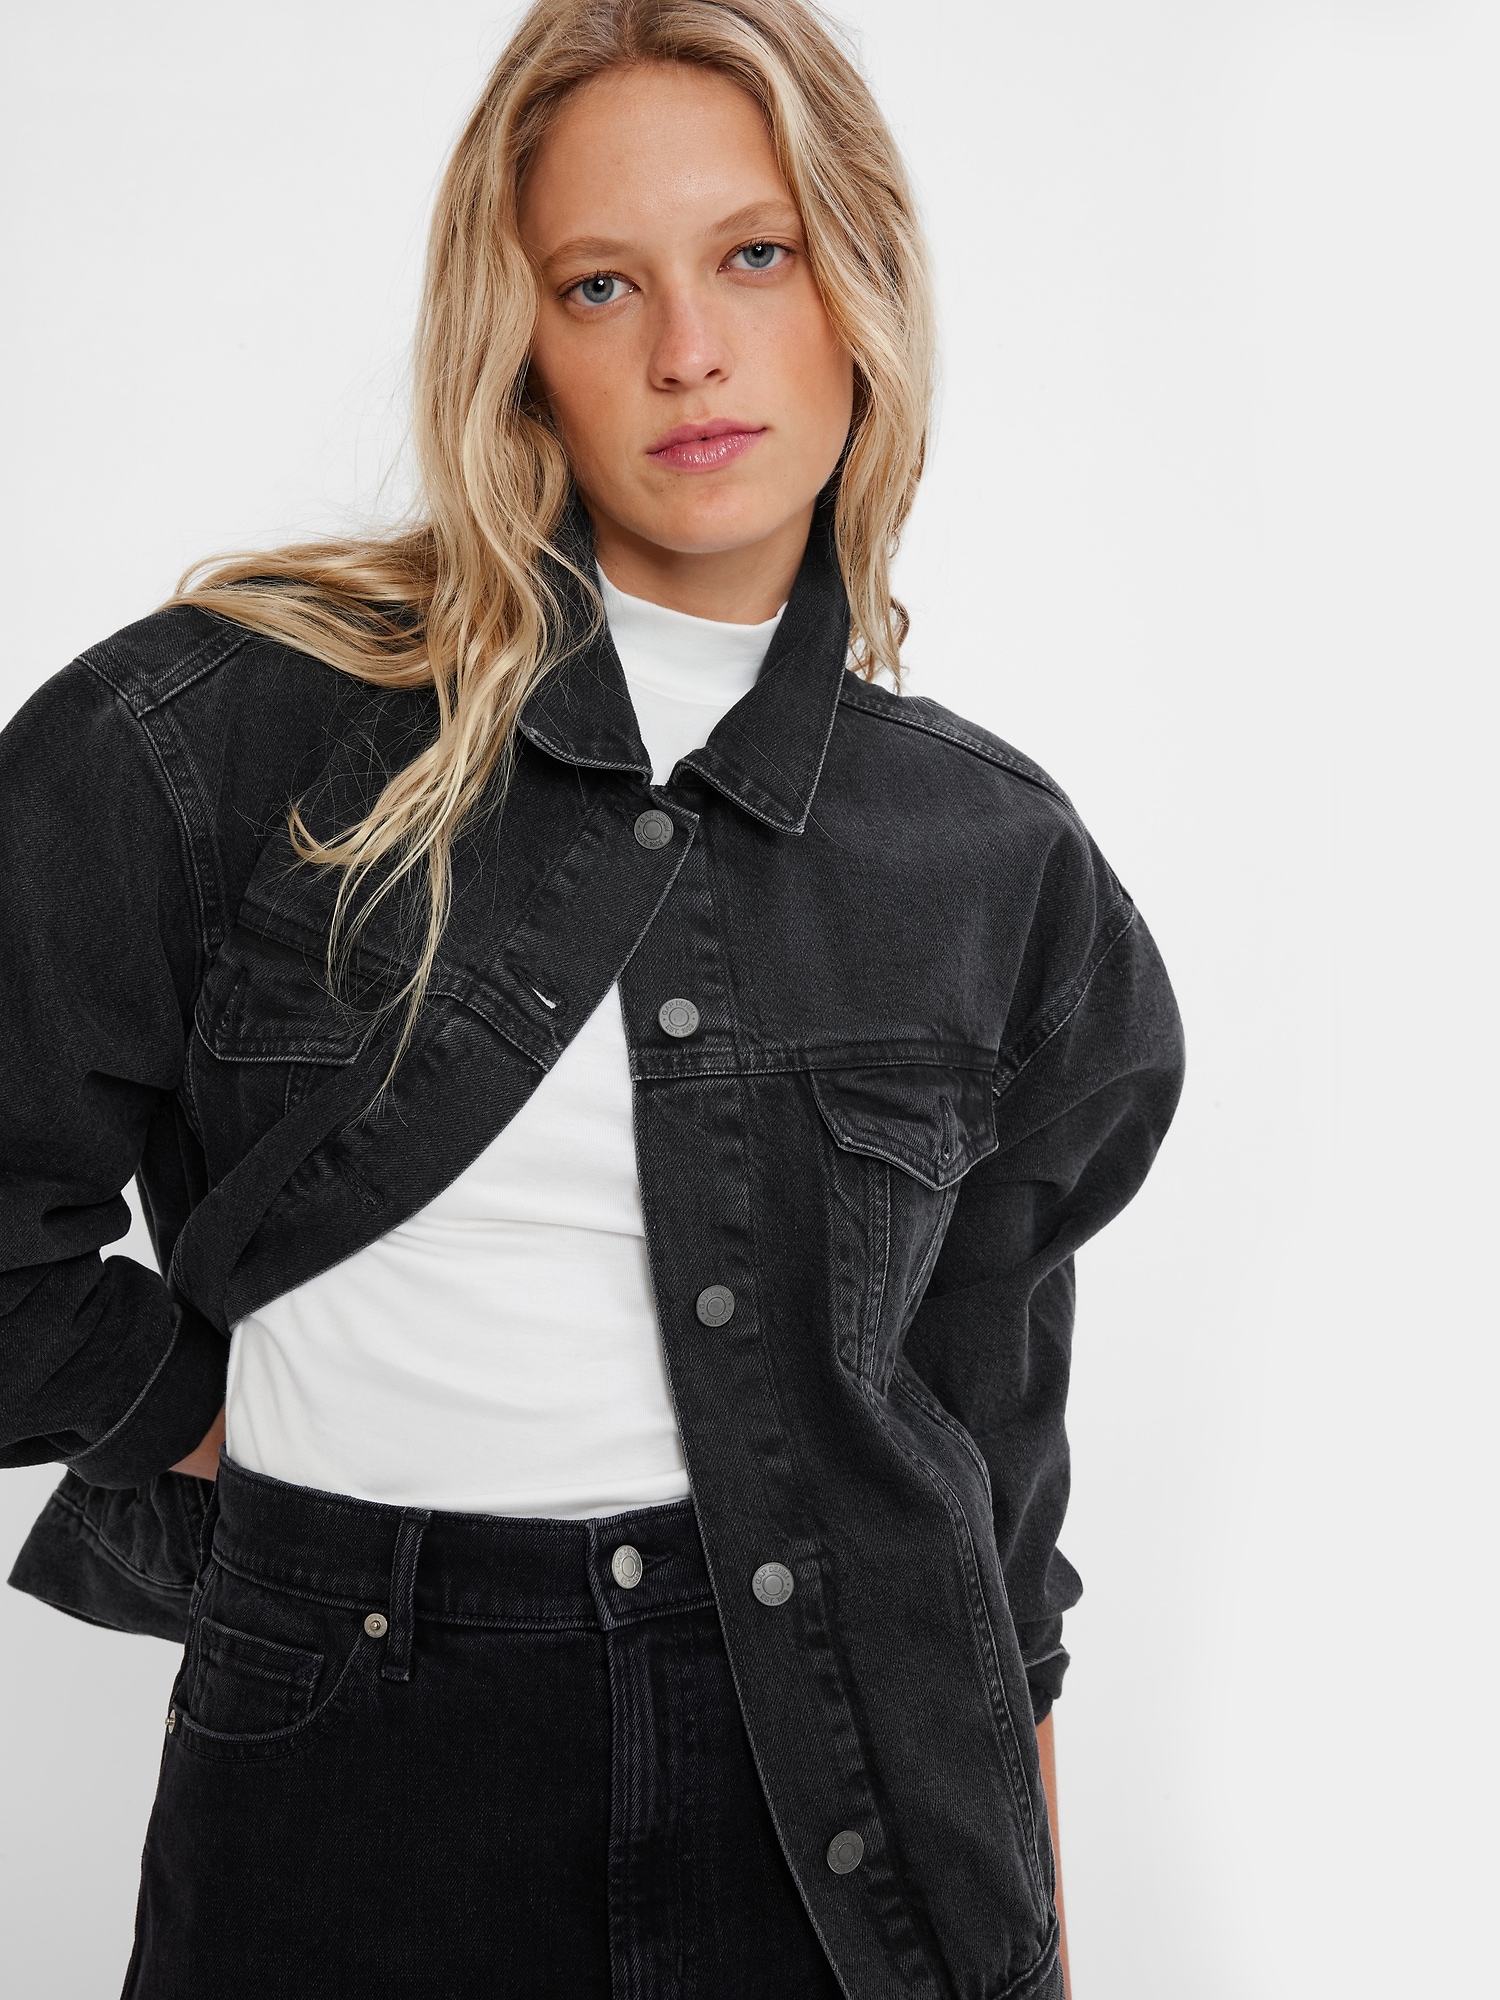 Gap Women's Oversized Icon Denim Jacket